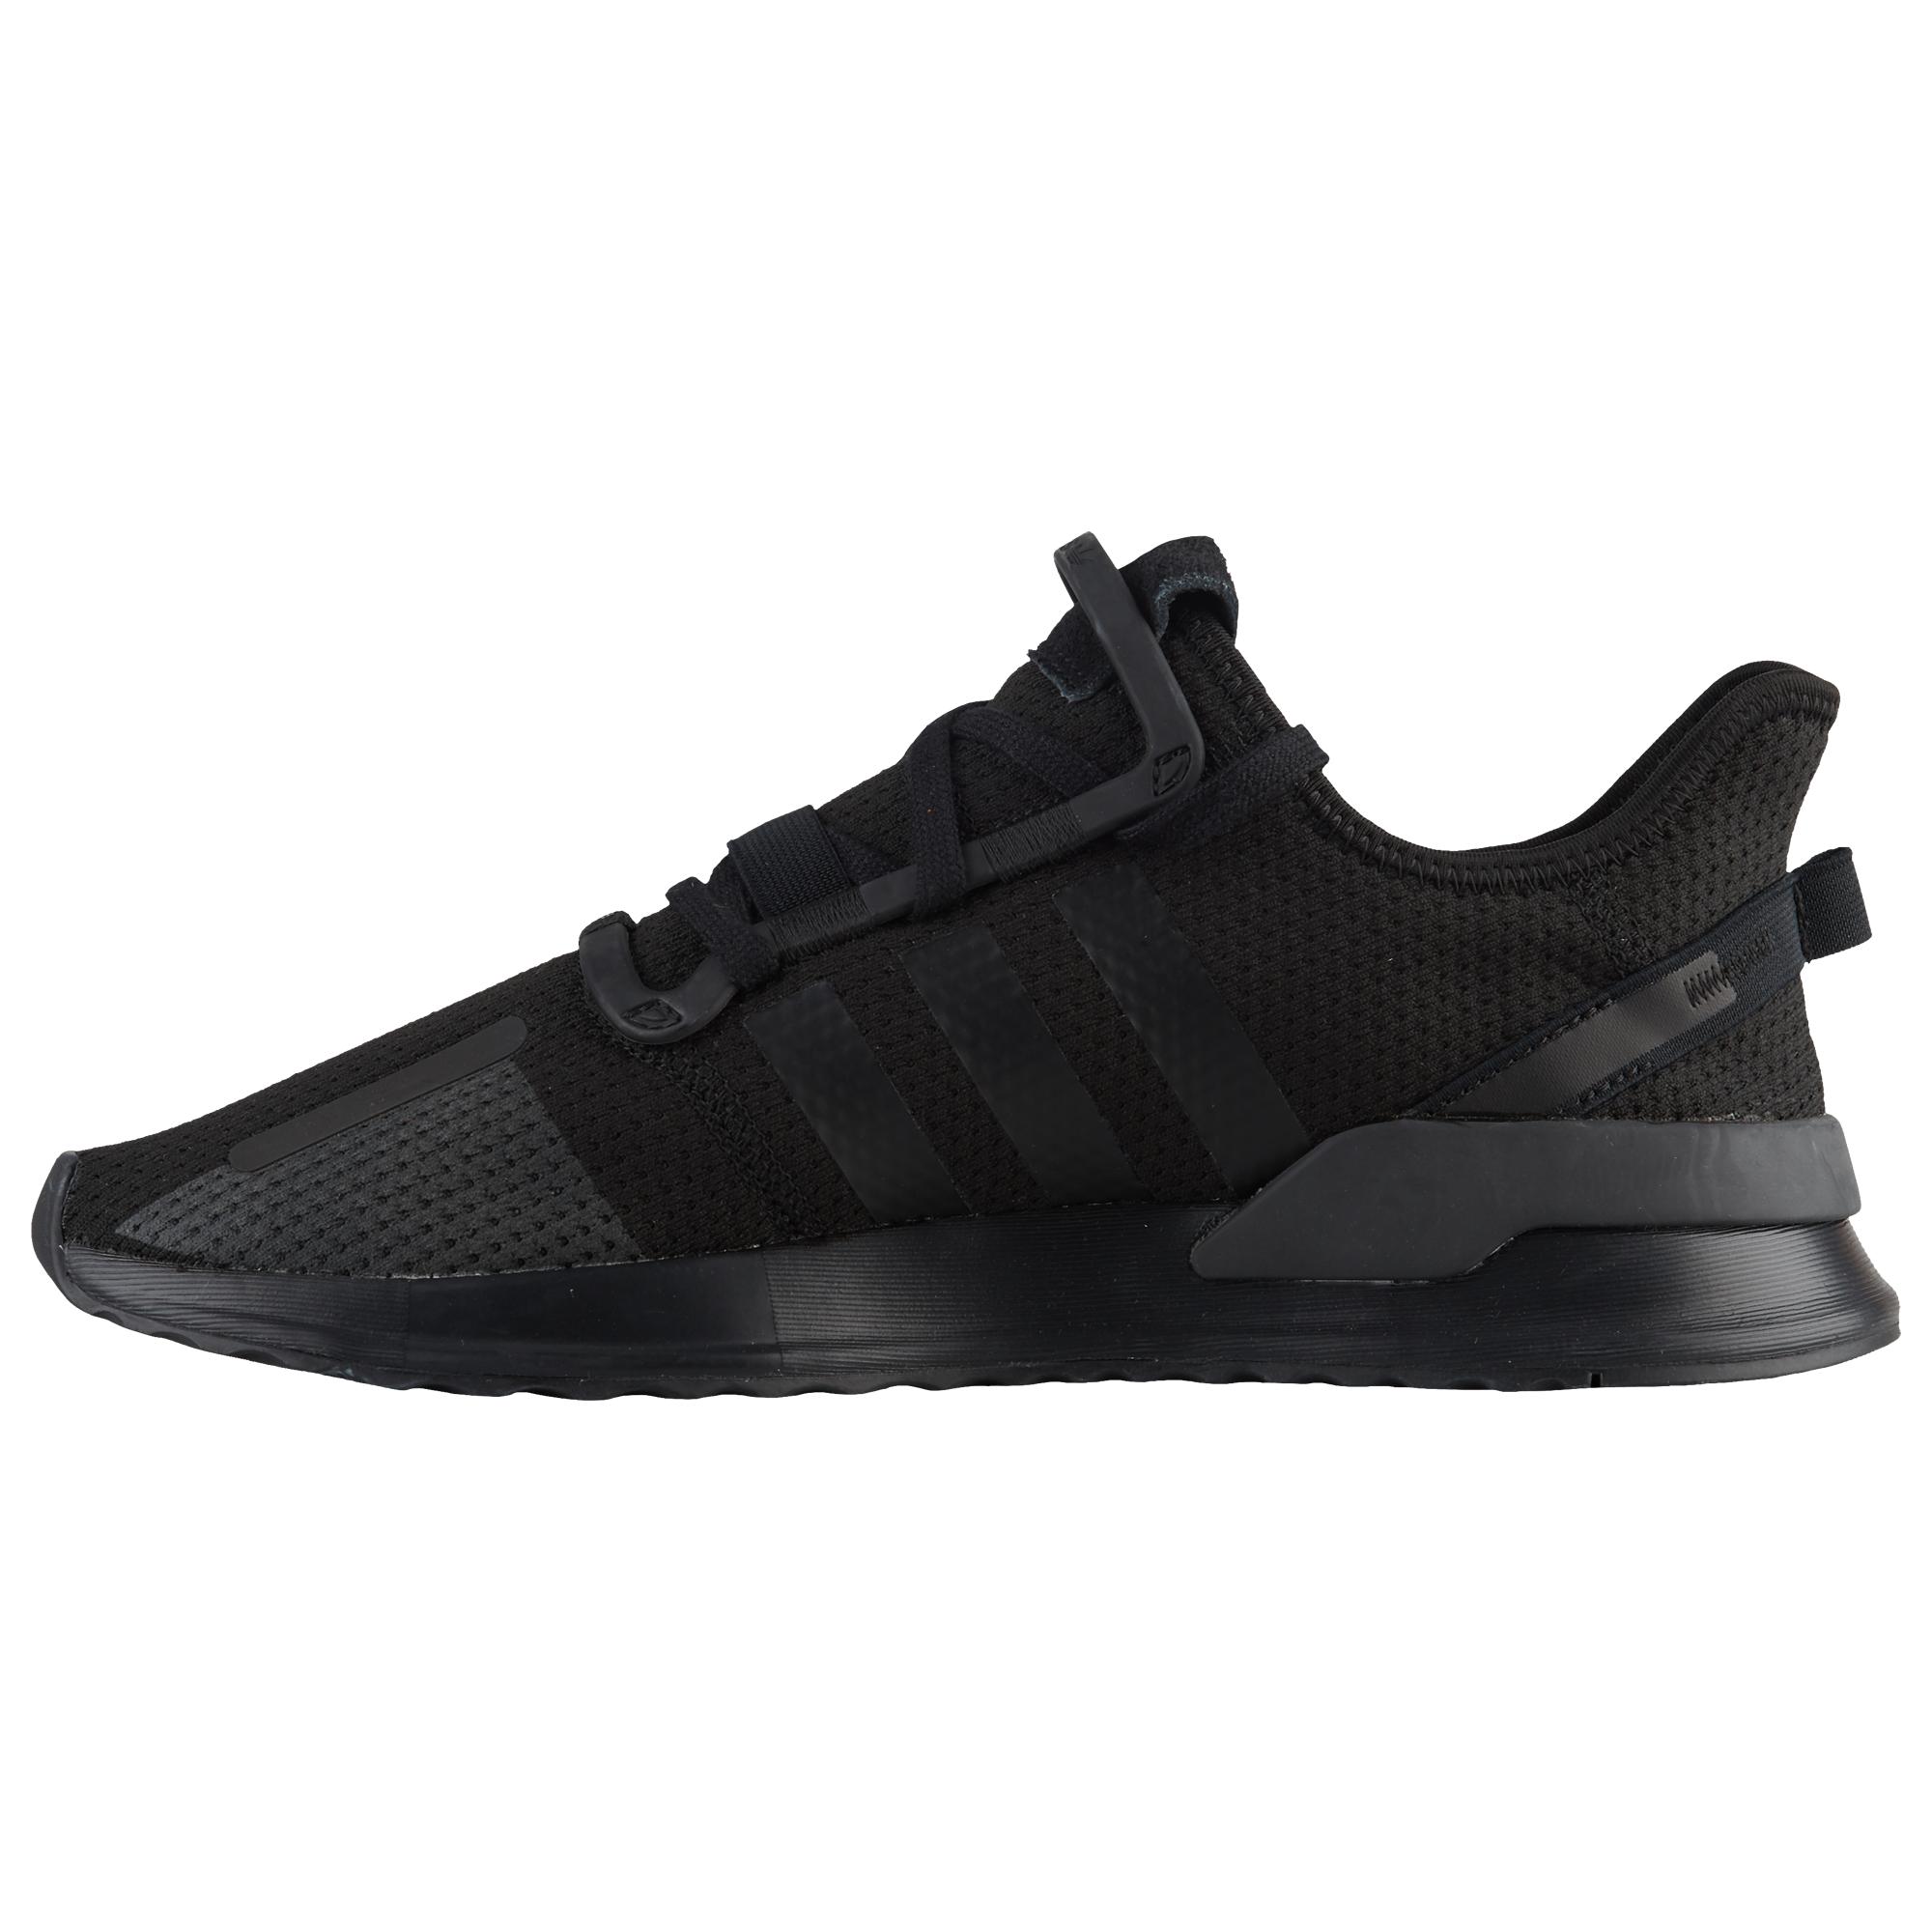 adidas Originals Suede U Path Run Running Shoes in Black/Black/White  (Black) for Men - Save 35% - Lyst